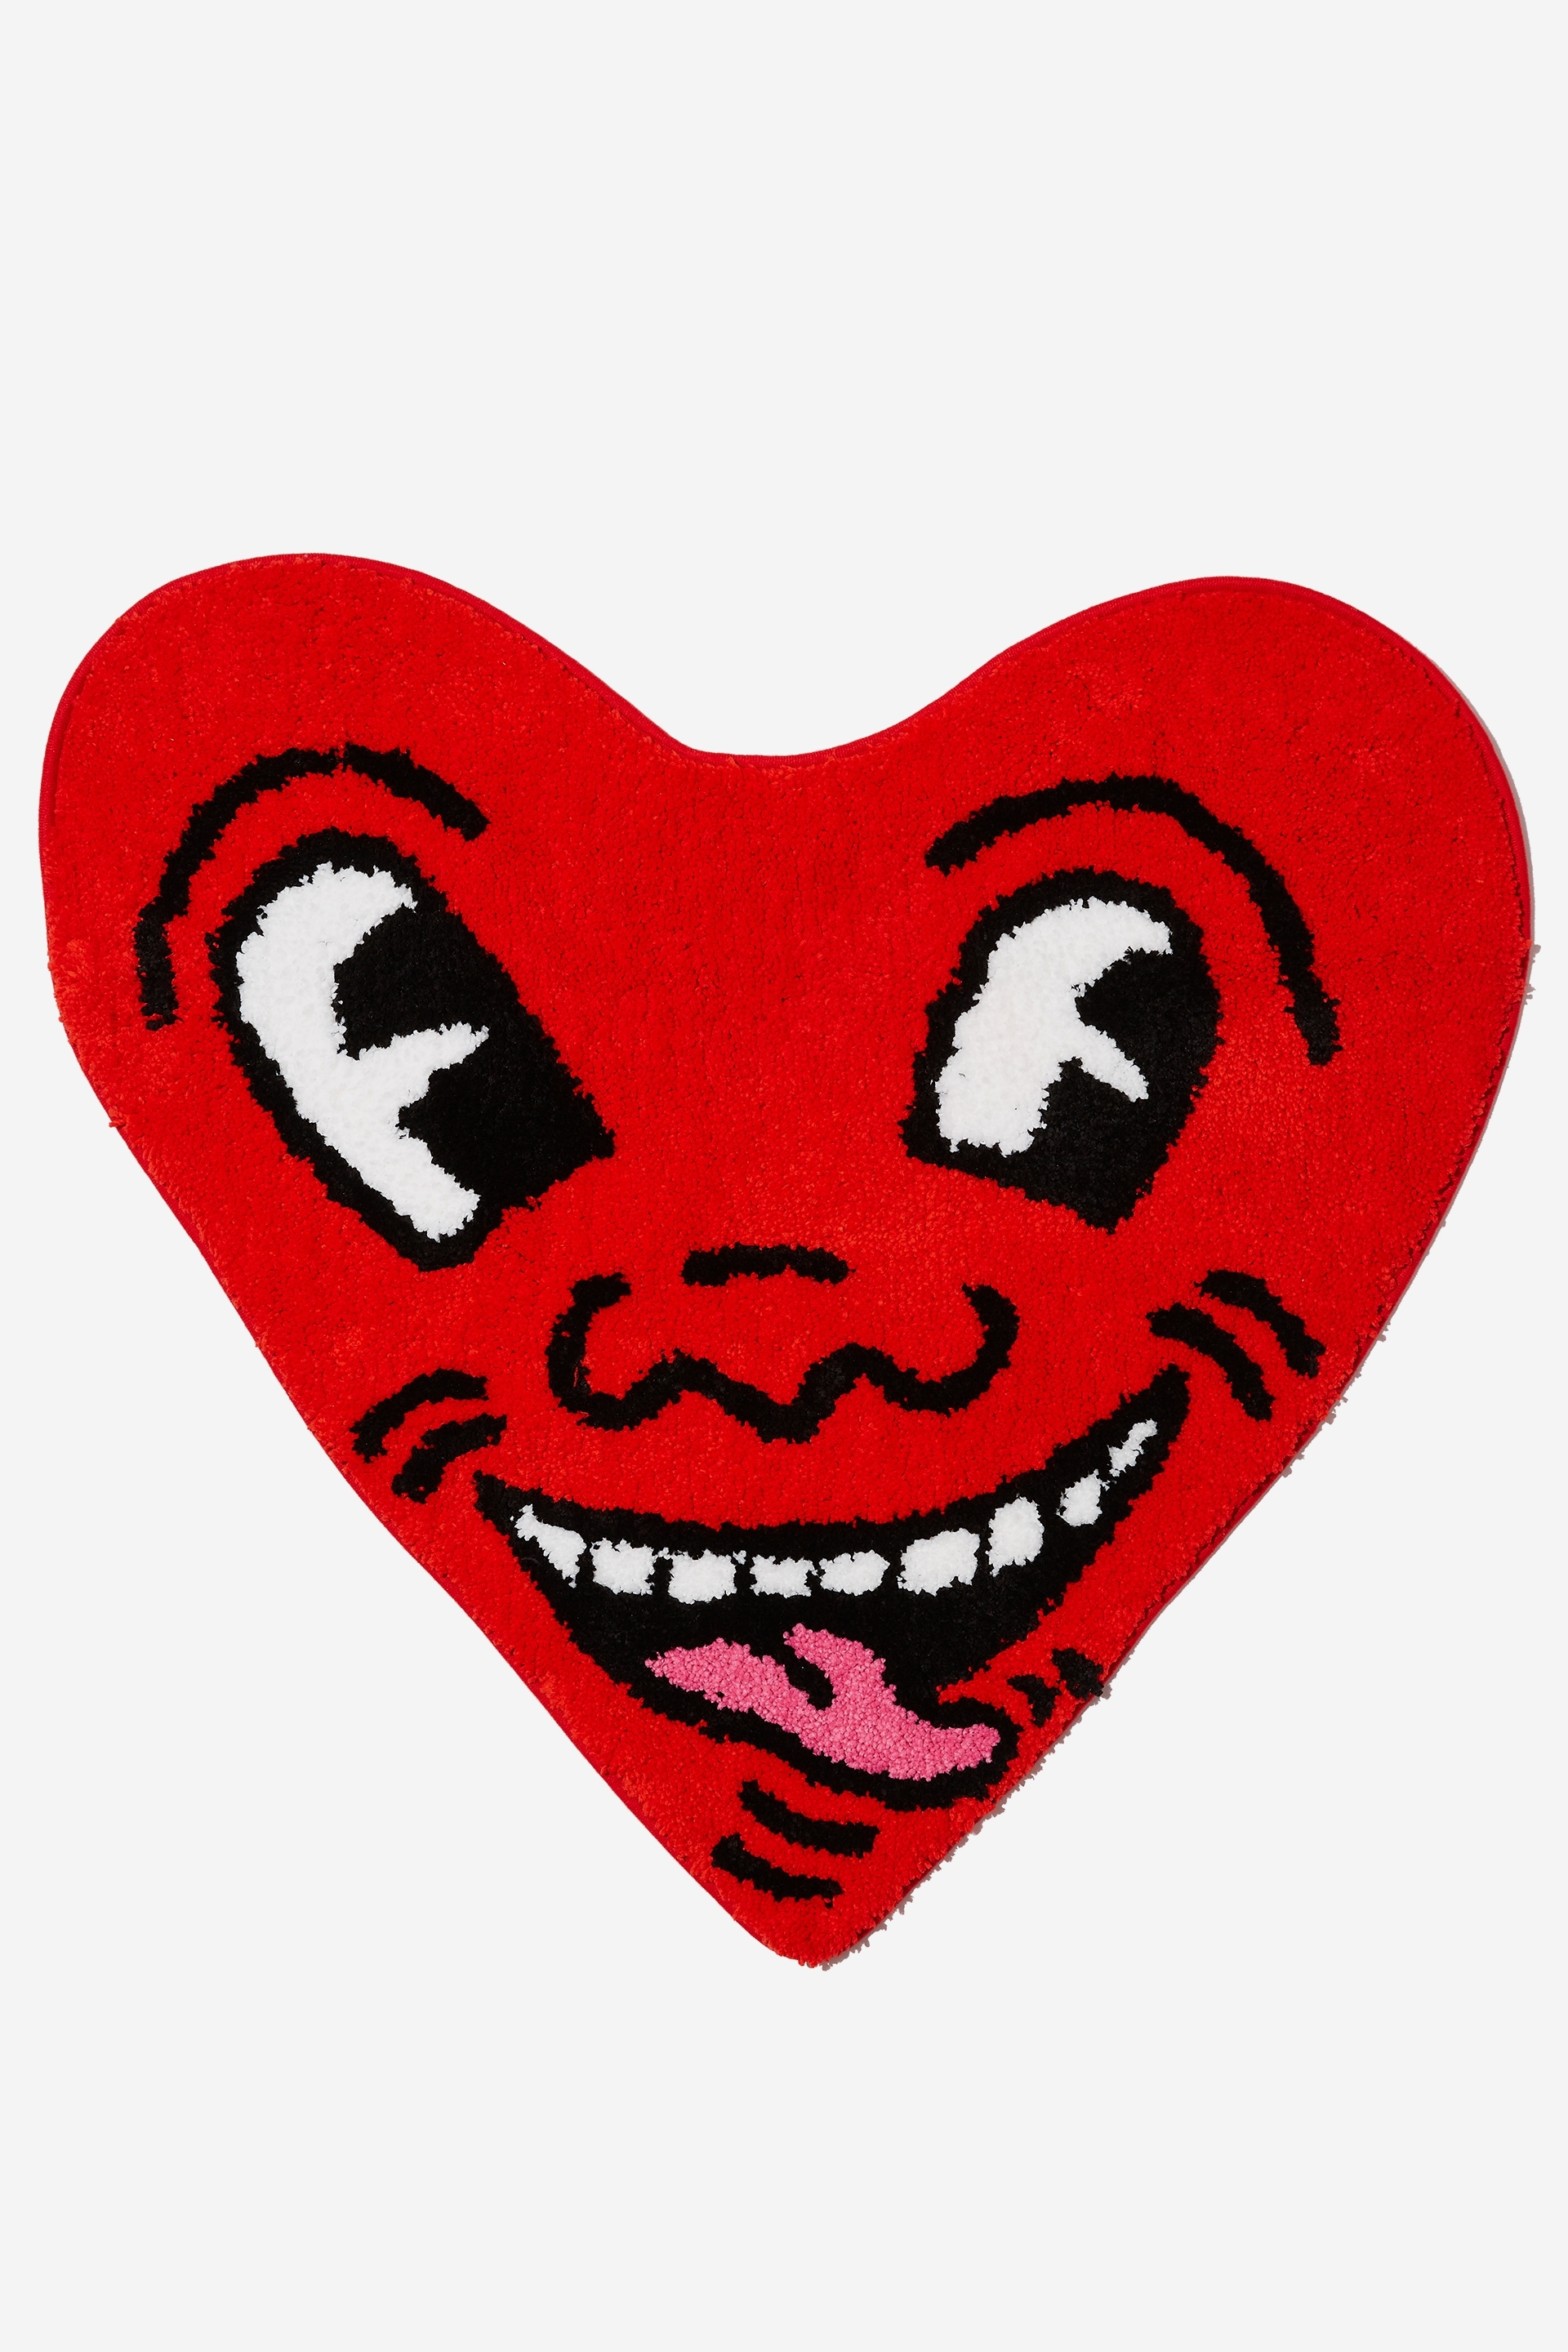 Keith Haring Heart Art Sexiezpicz Web Porn